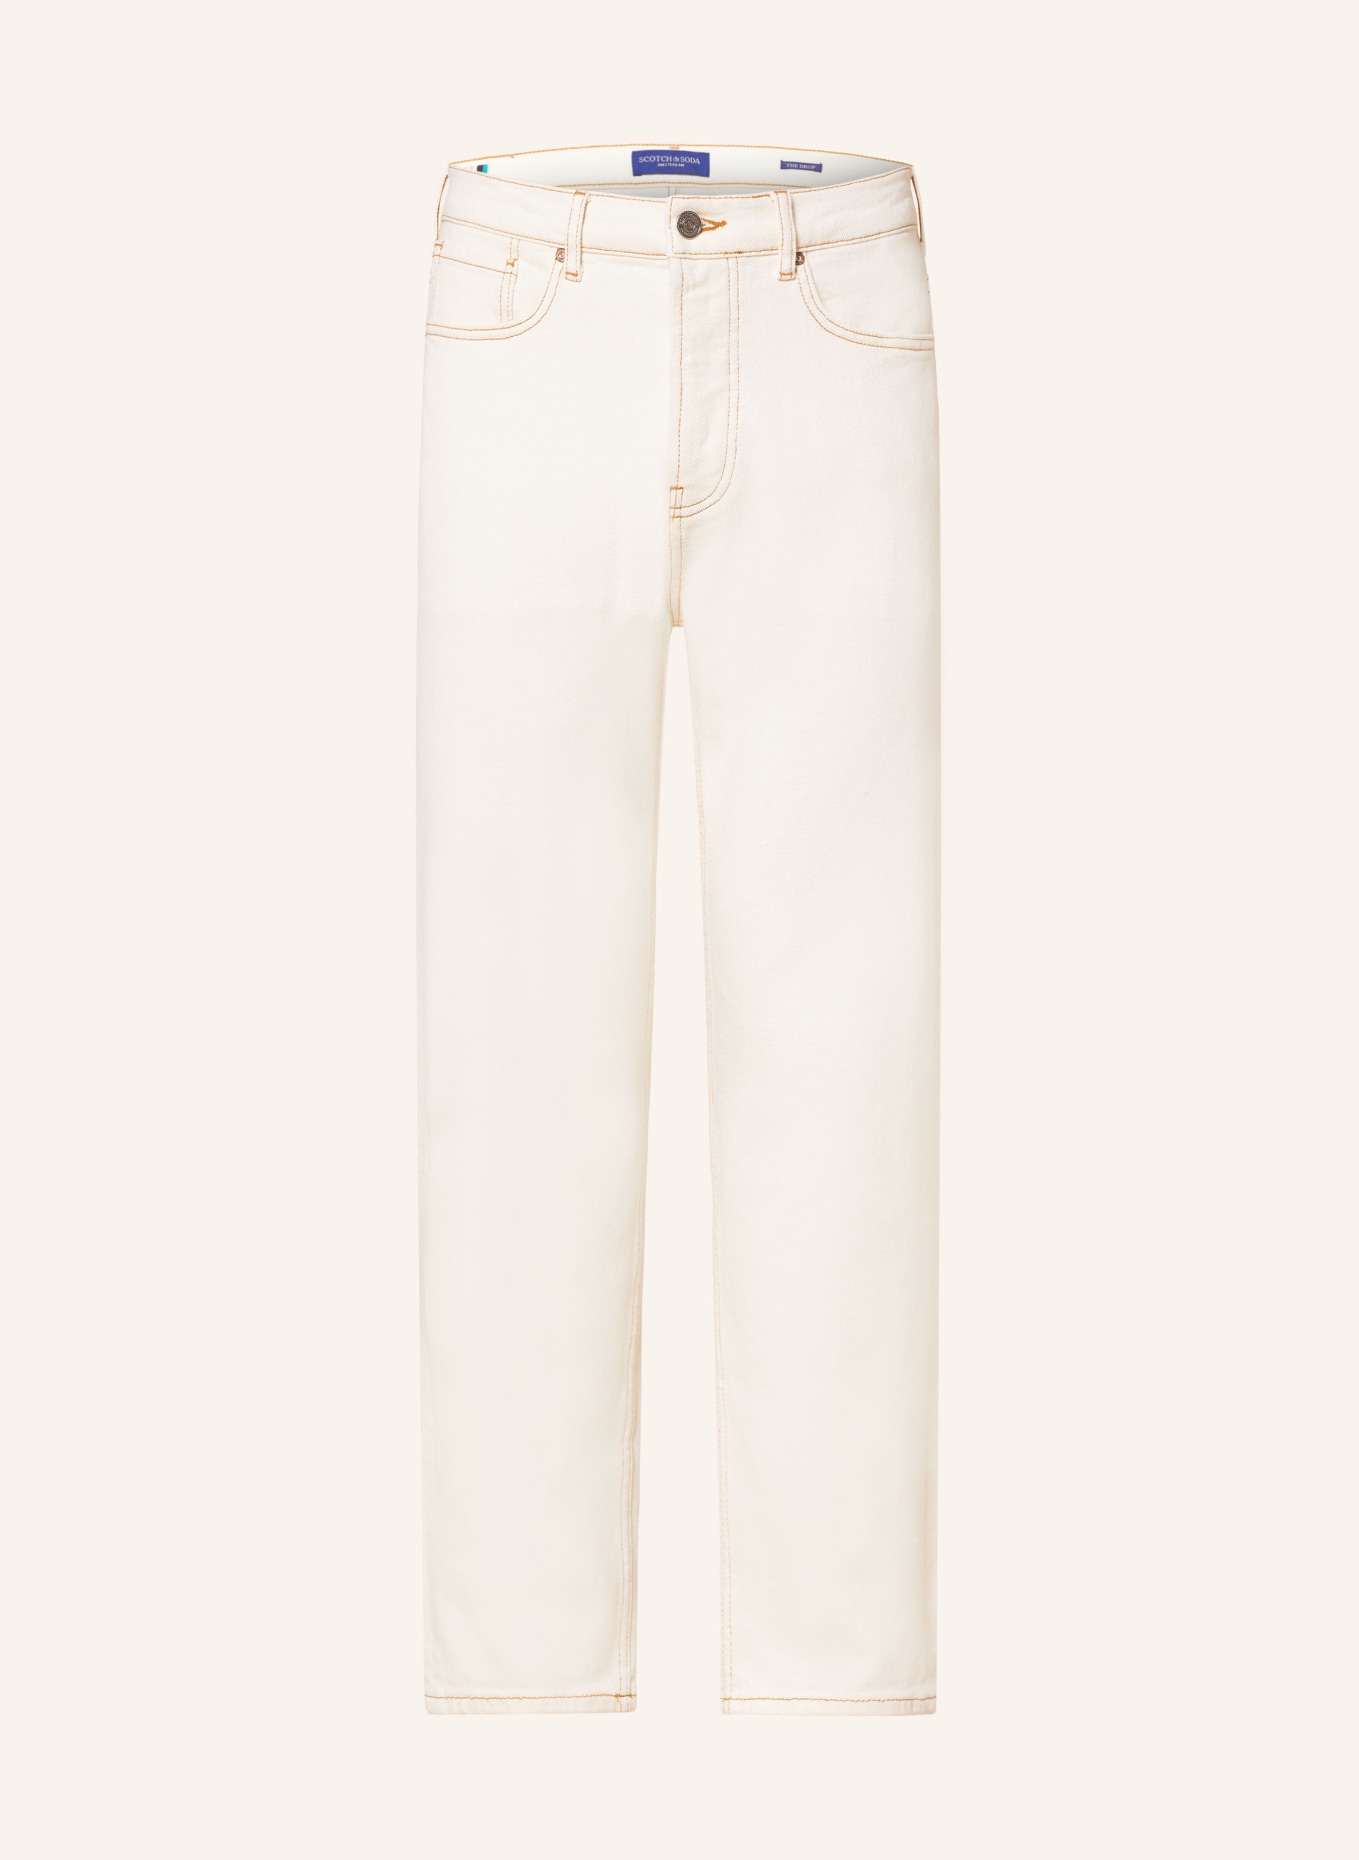 SCOTCH & SODA Jeans THE DROP Regular Tapered Fit, Farbe: 1926 Whitewash (Bild 1)